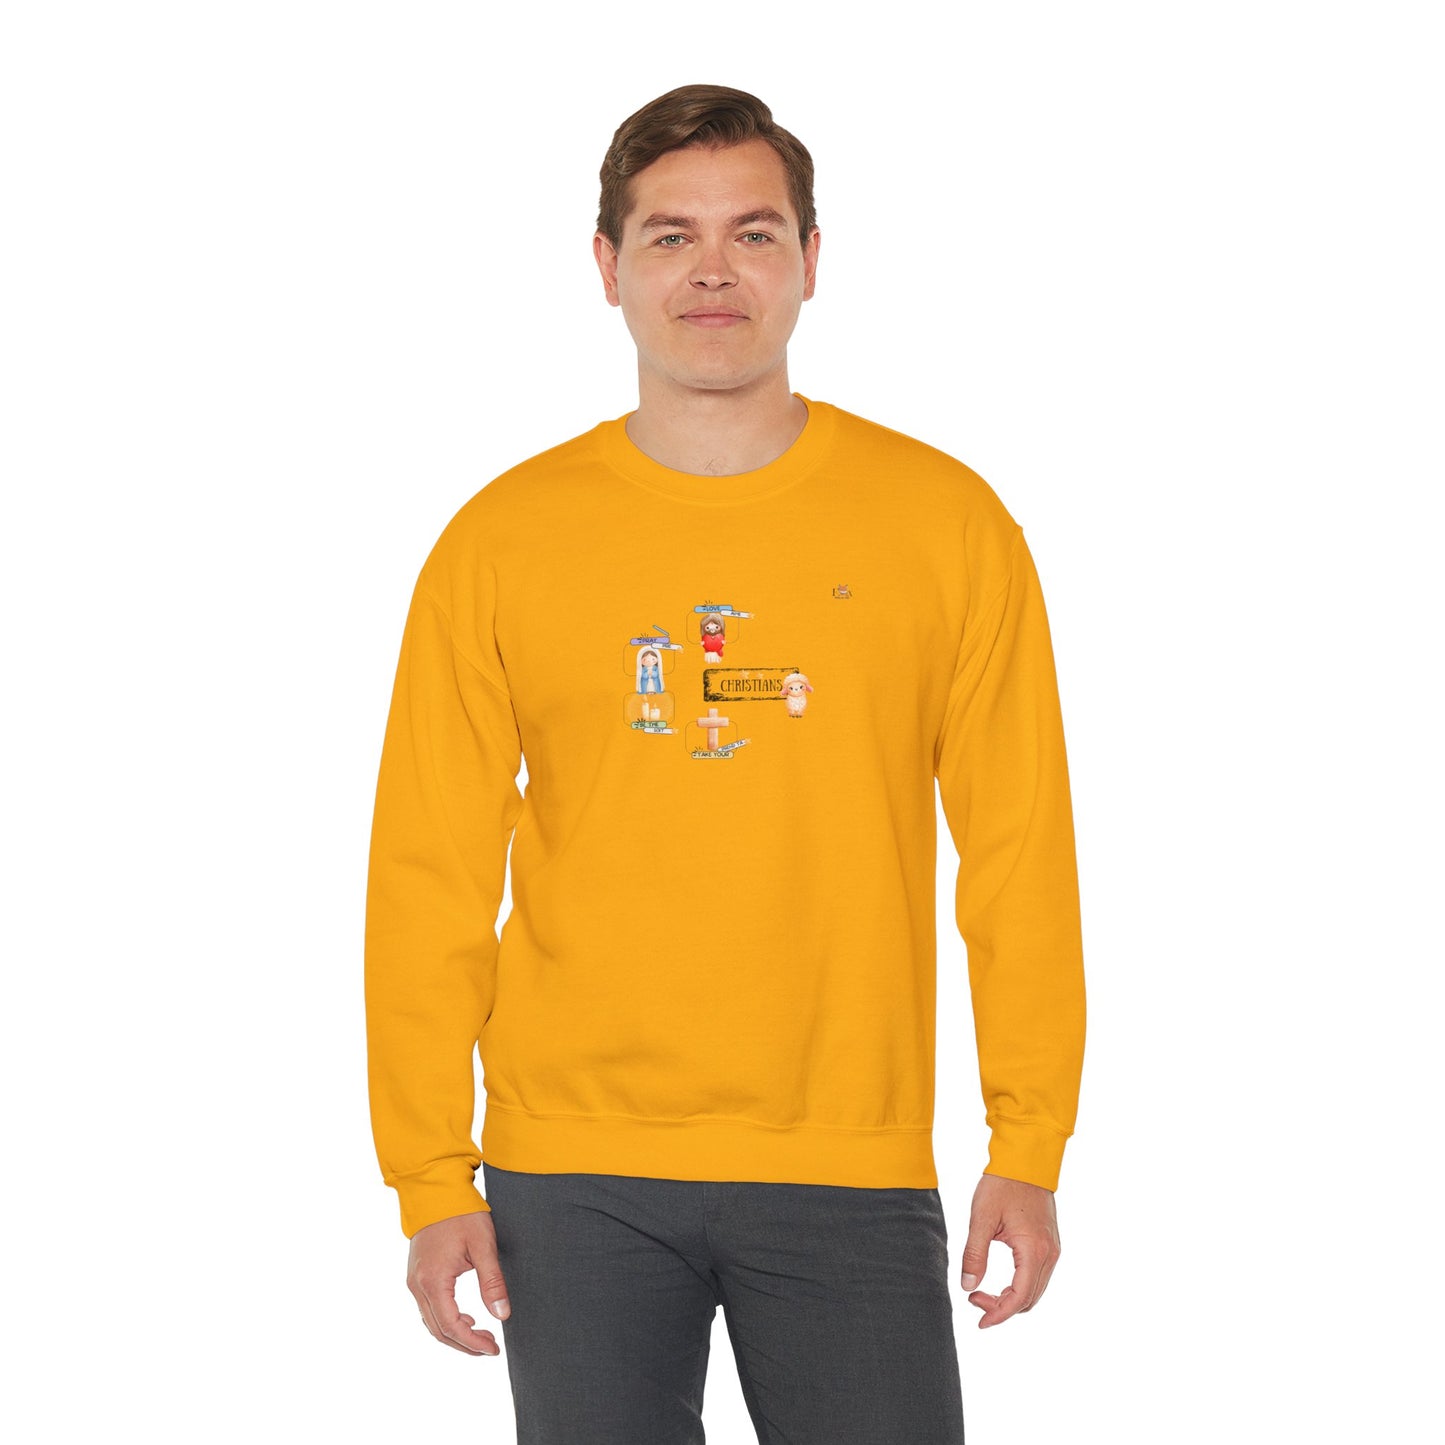 Christian Behavior [Lamb]-Bilingual [Eng-Fr]- Unisex Crewneck Sweatshirt